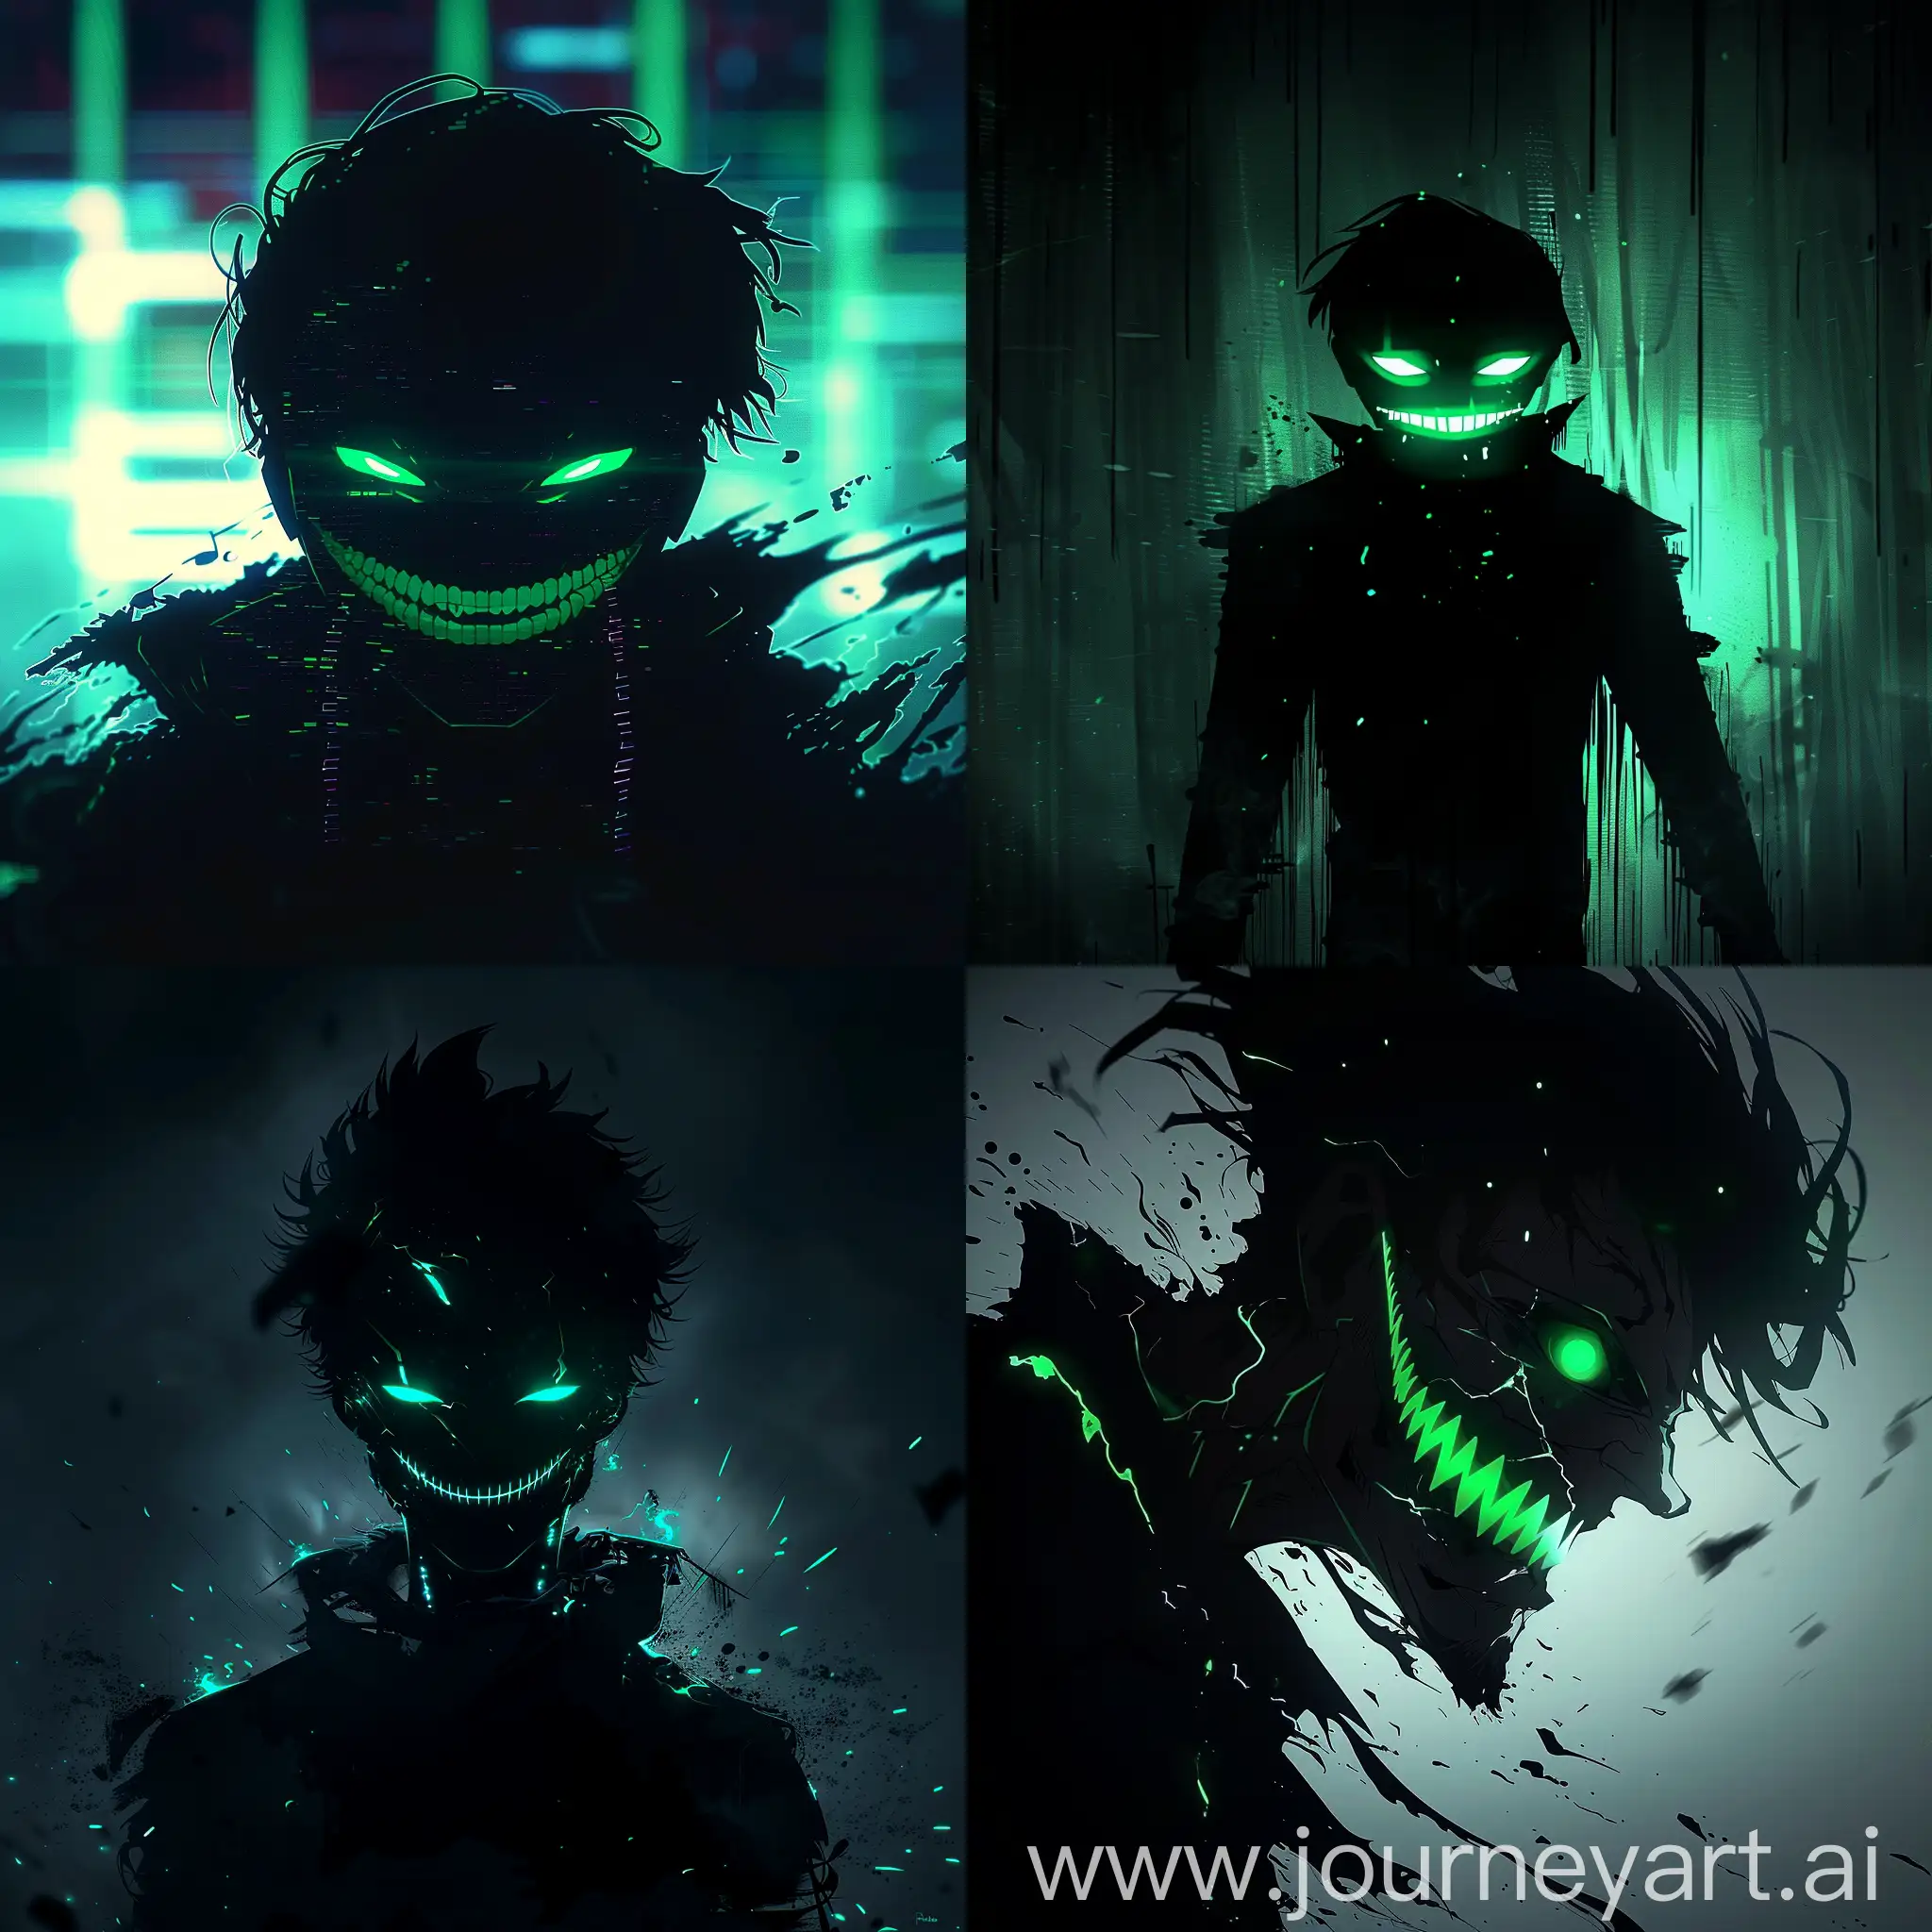 Dark anime villain end battle dark silhouette, limbo style, glowing green eyes and smile, glitch effect, brazilian phonk music artwork, hype, energetic